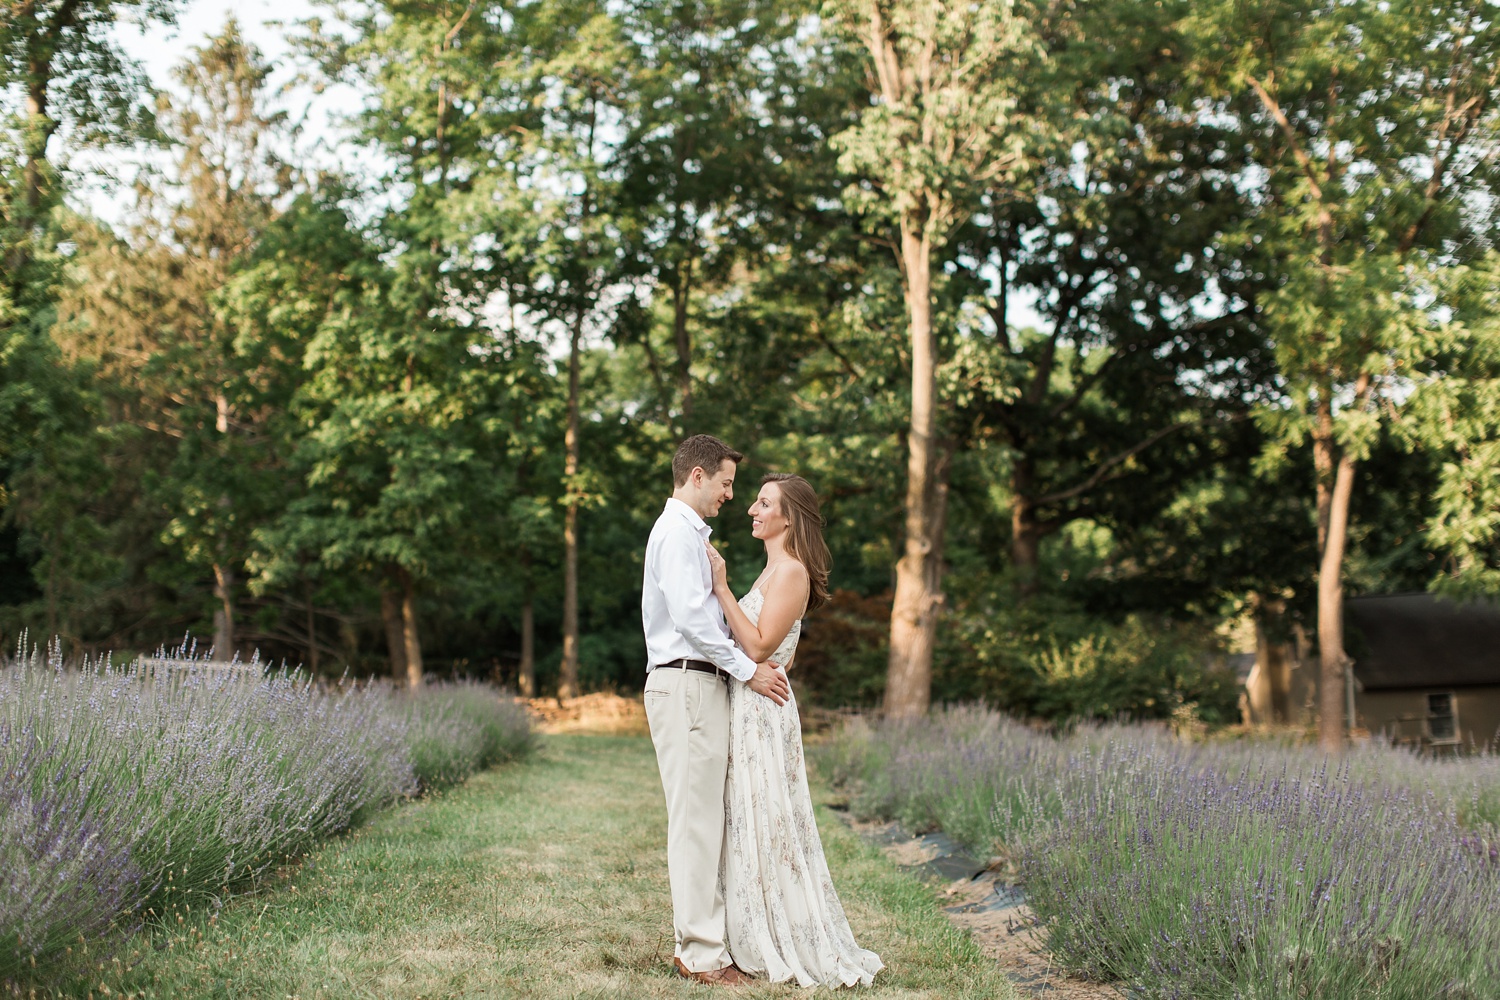 Lavender Farm Summer Sunset Engagement | Peace Valley Park Engagement Photographer | Victoria and Chris